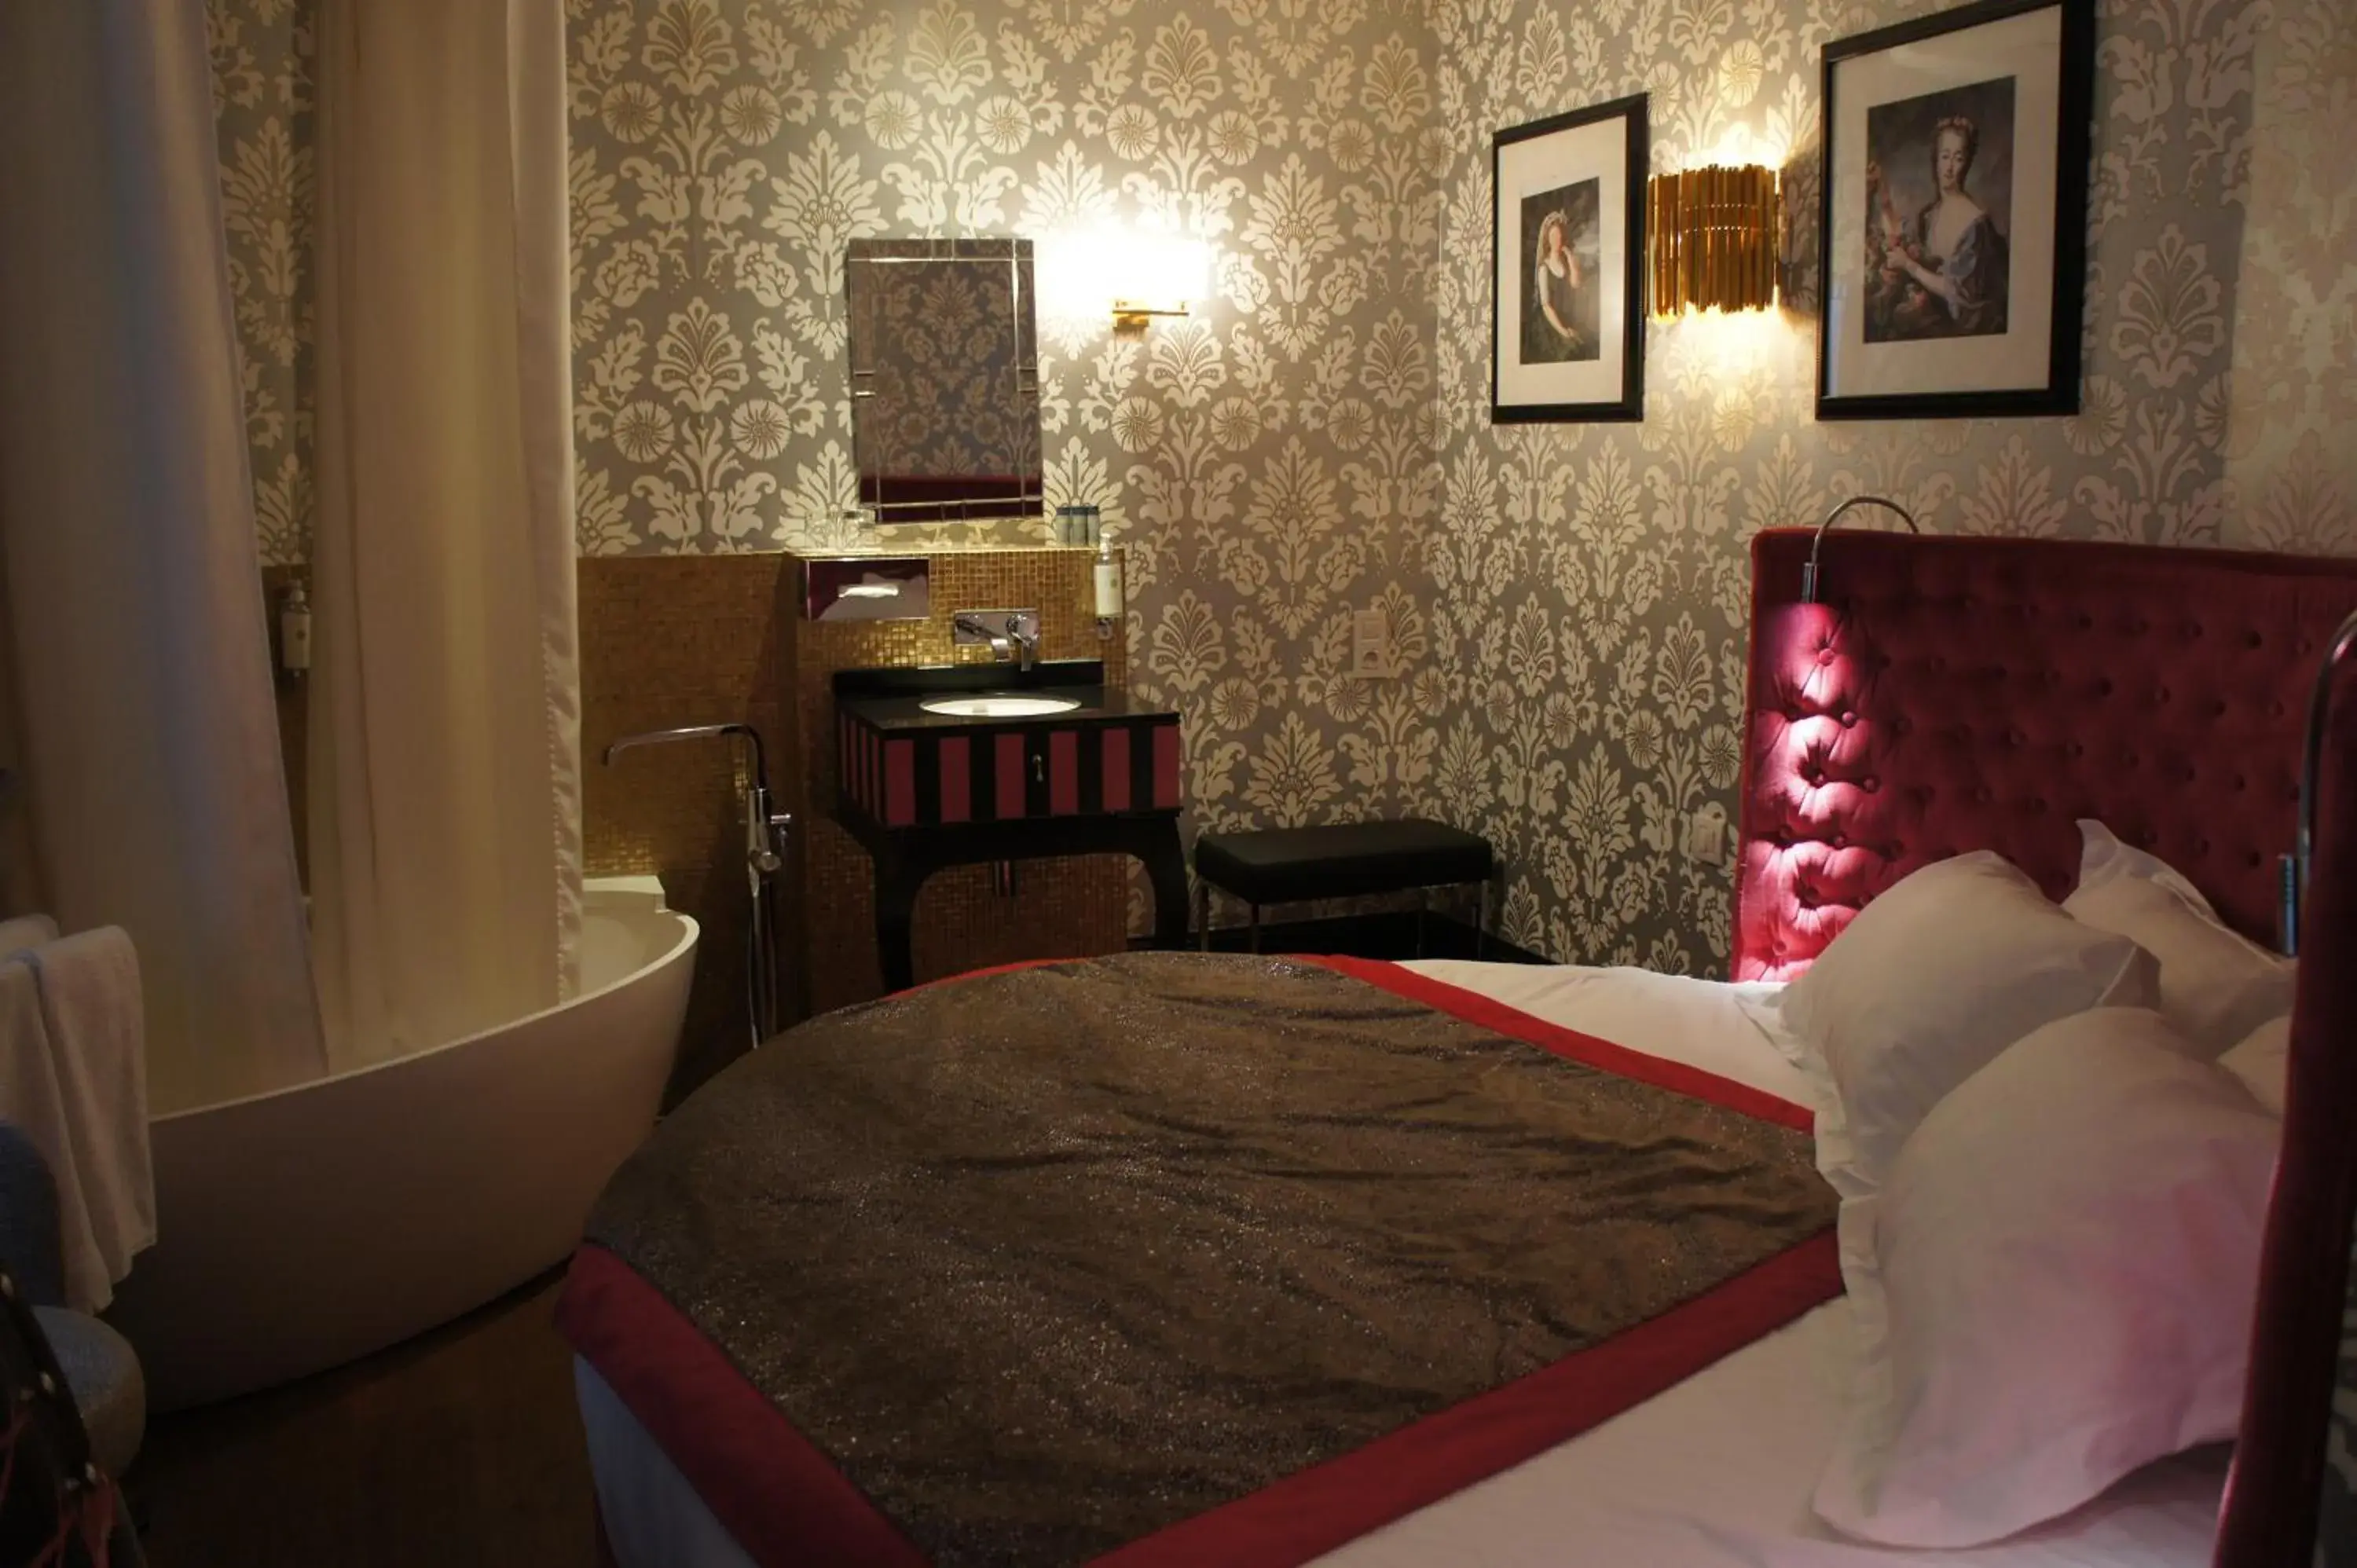 Bed in Tonic Hotel Saint Germain des Pr